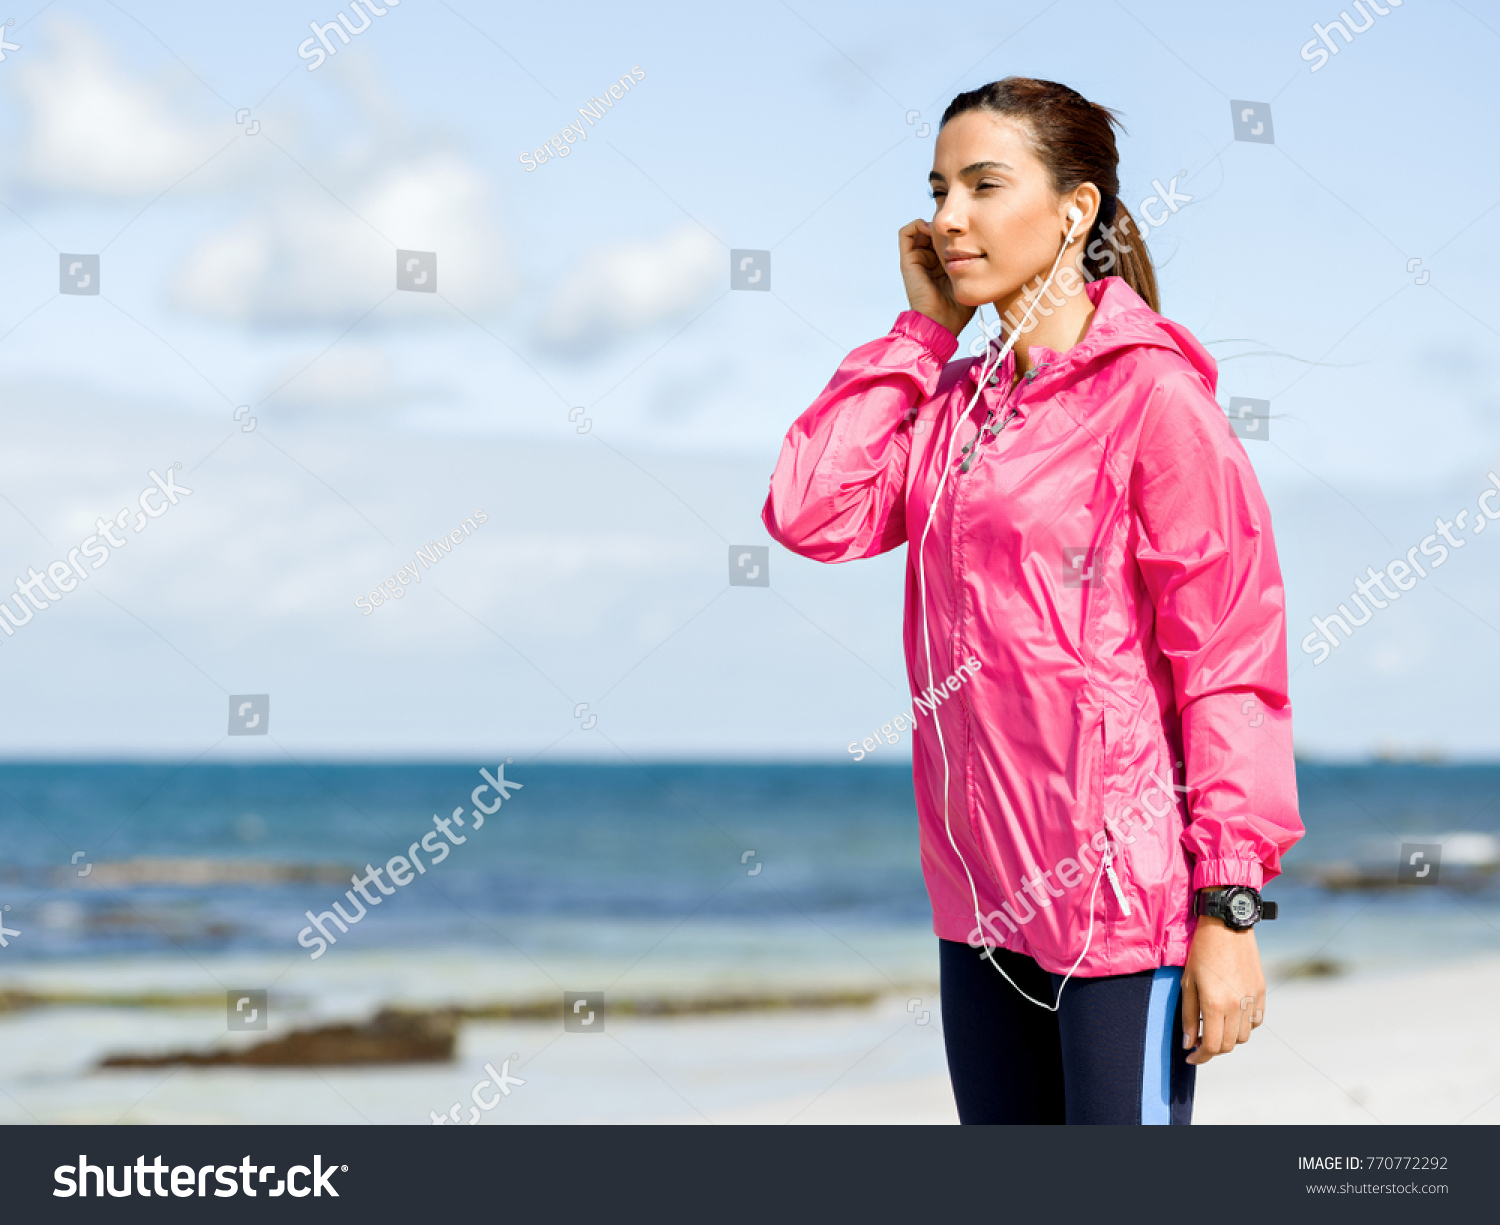 Sporty woman with earphones on the sea coast #770772292